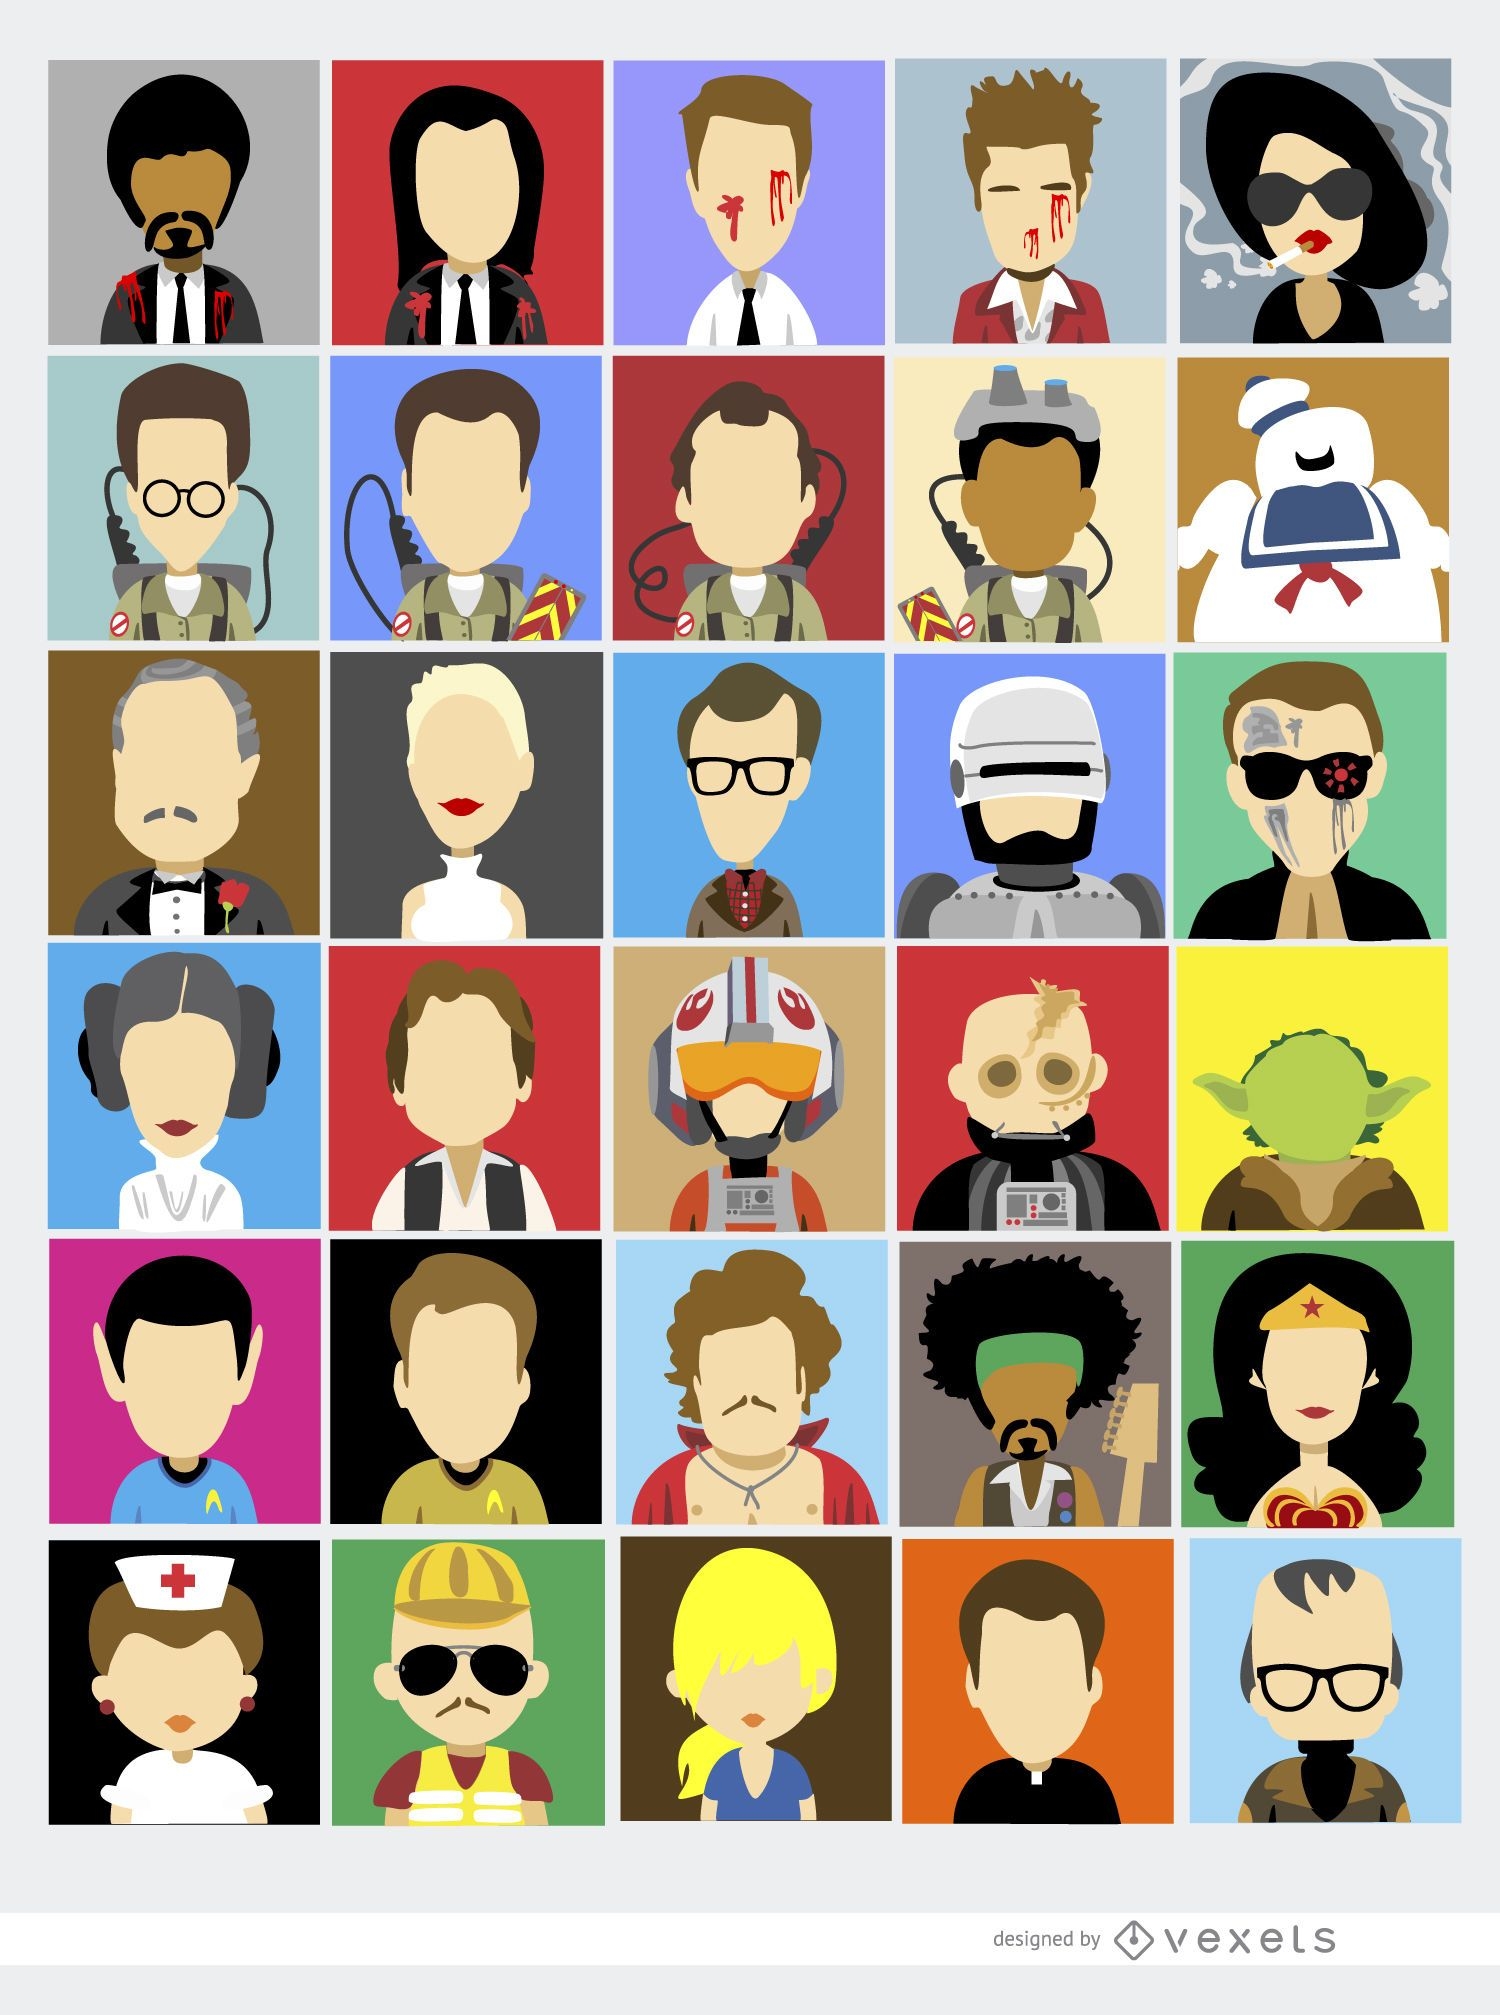 30 personajes famosos del cine